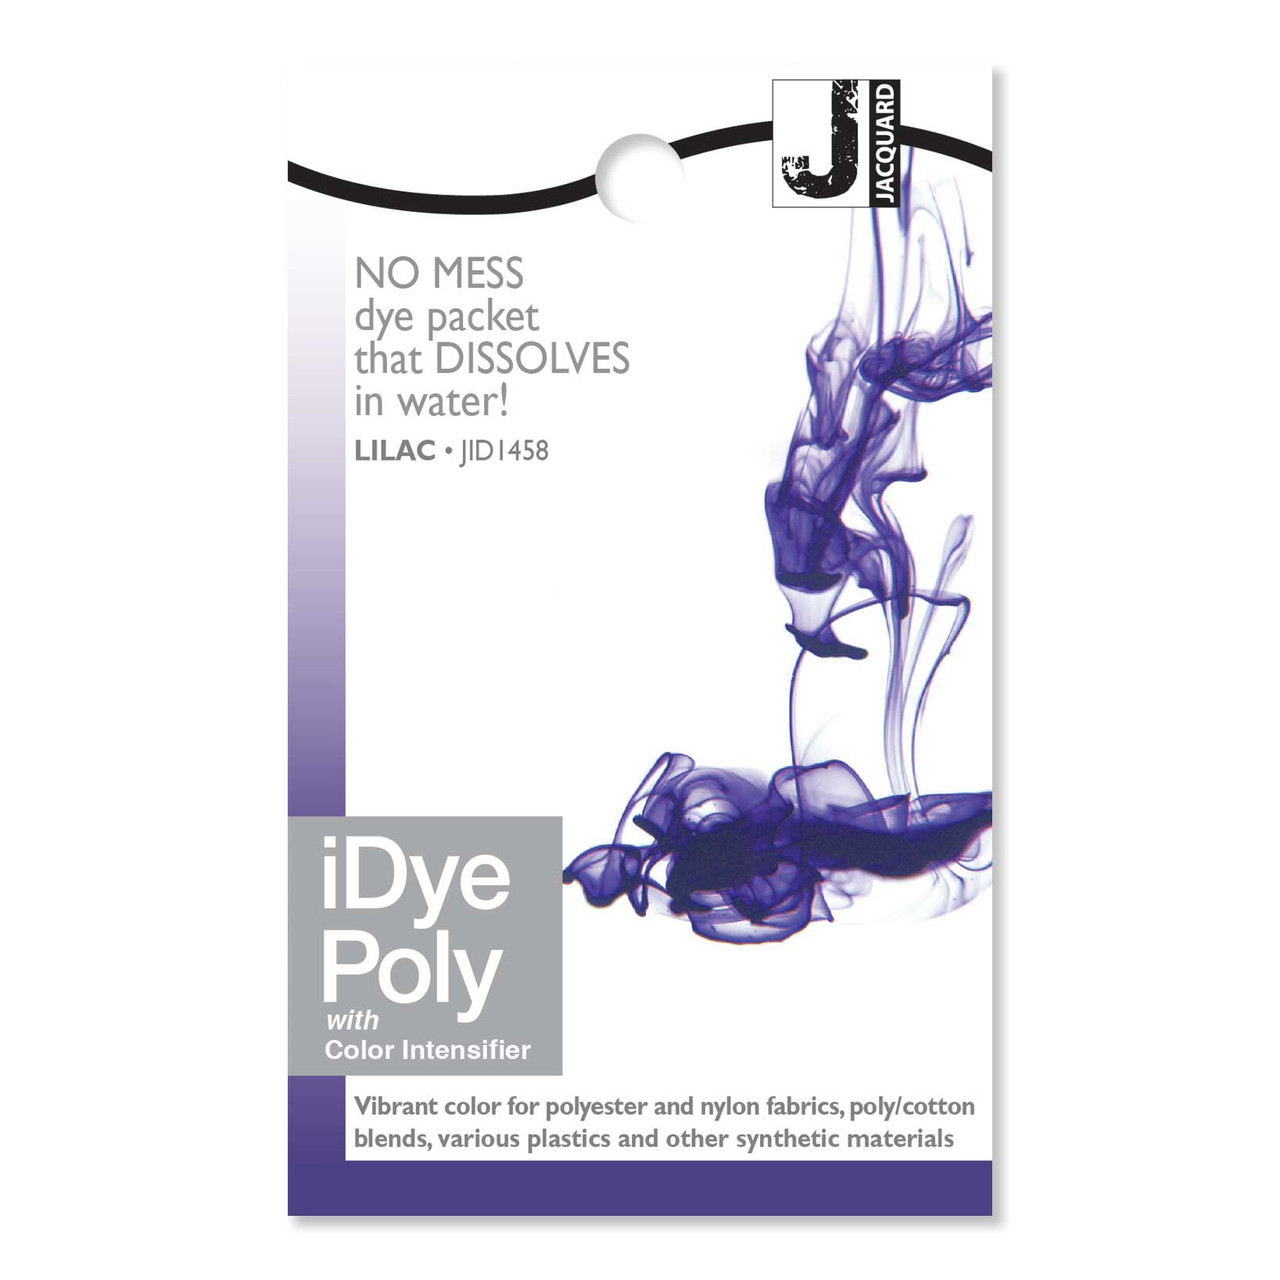 Jacquard I-Dye Poly 14g 458 - Wet Materials and Framing